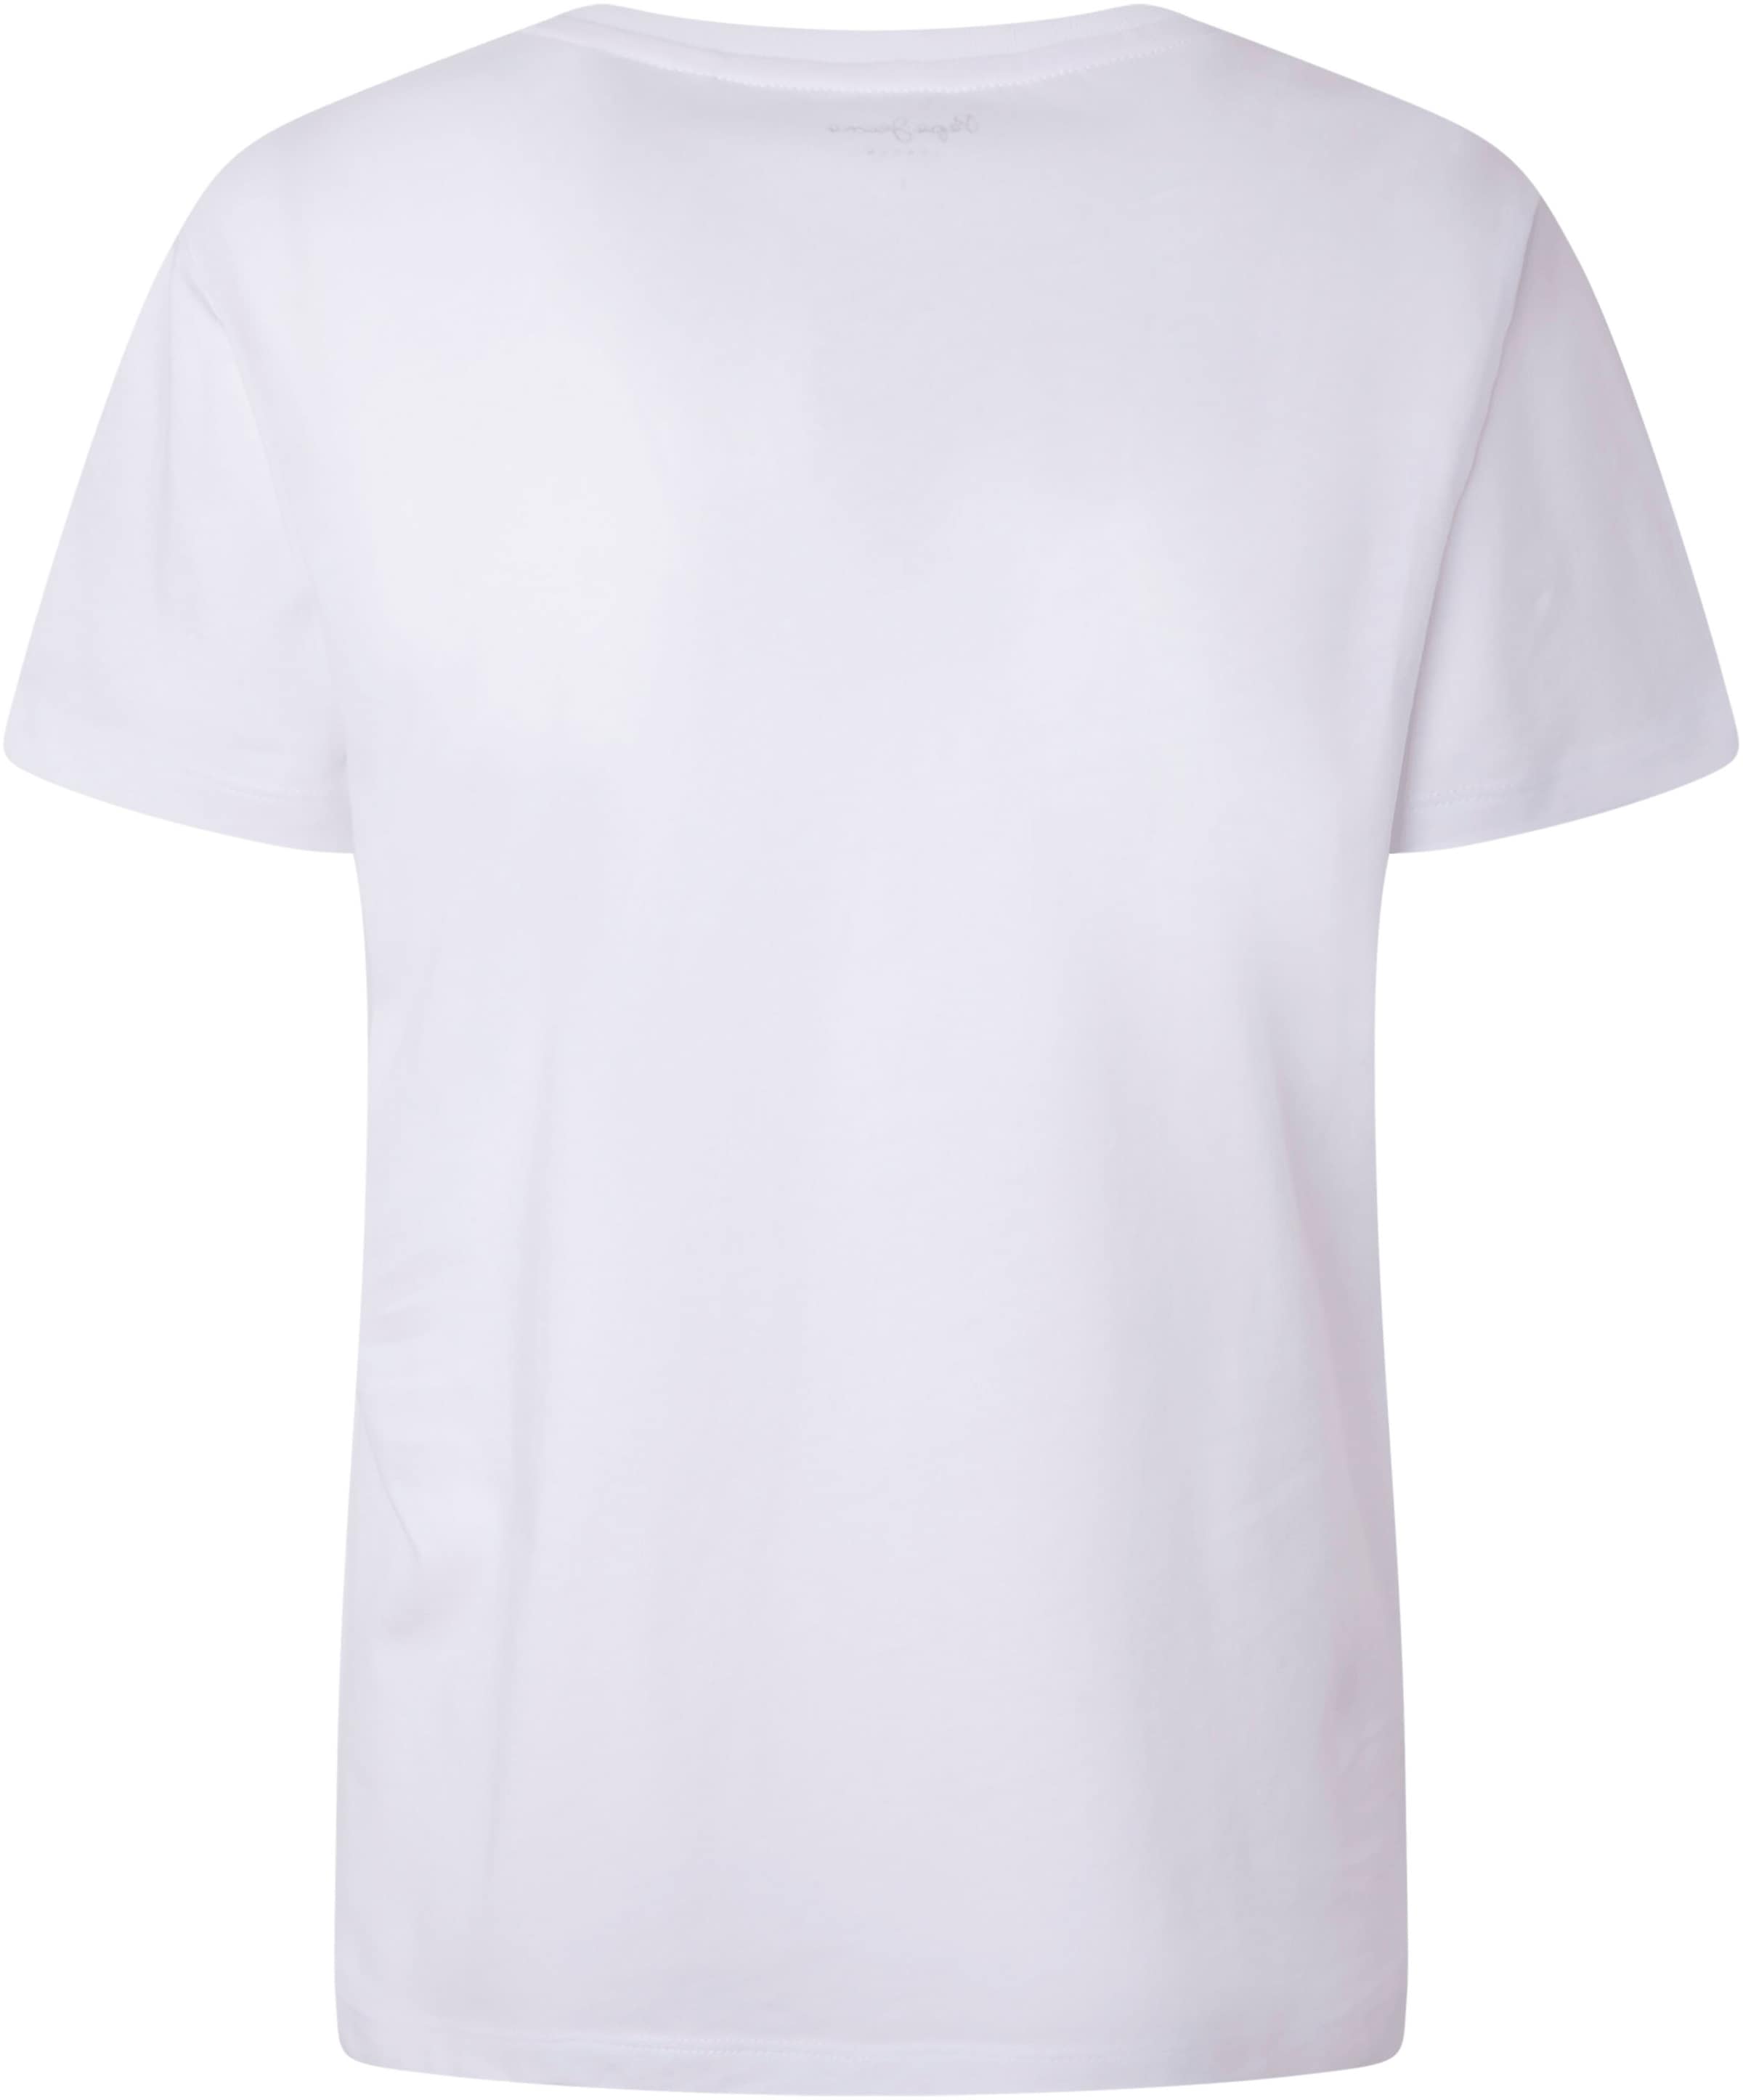 Pepe Jeans kaufen »Lali« T-Shirt